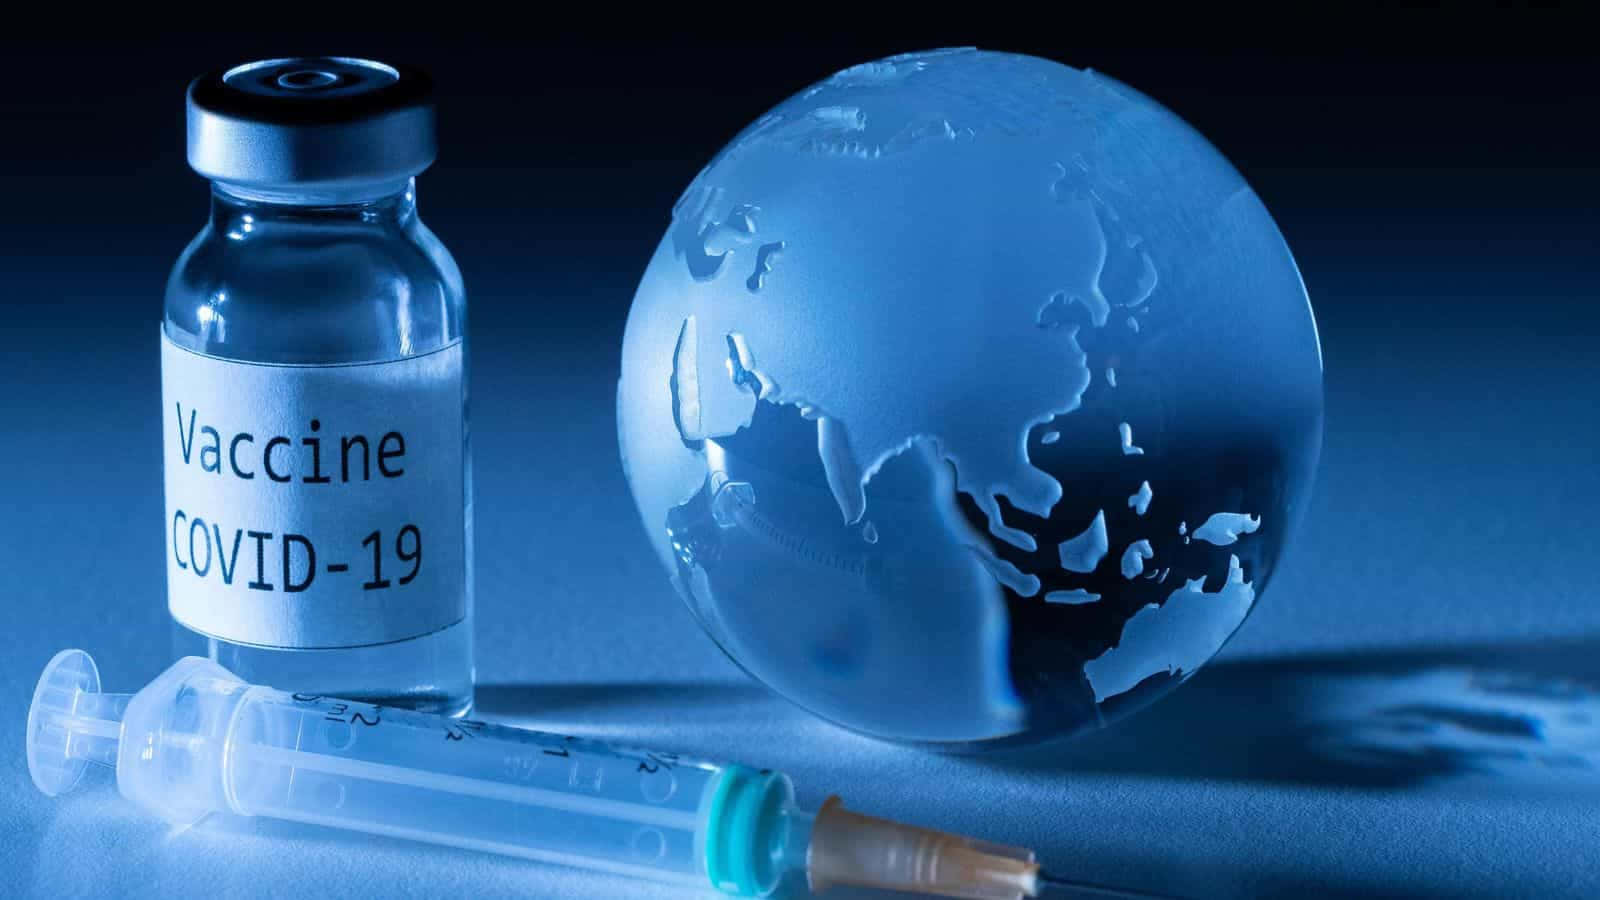 Covid-19 Vaccine Syringe And Earth Globe Background